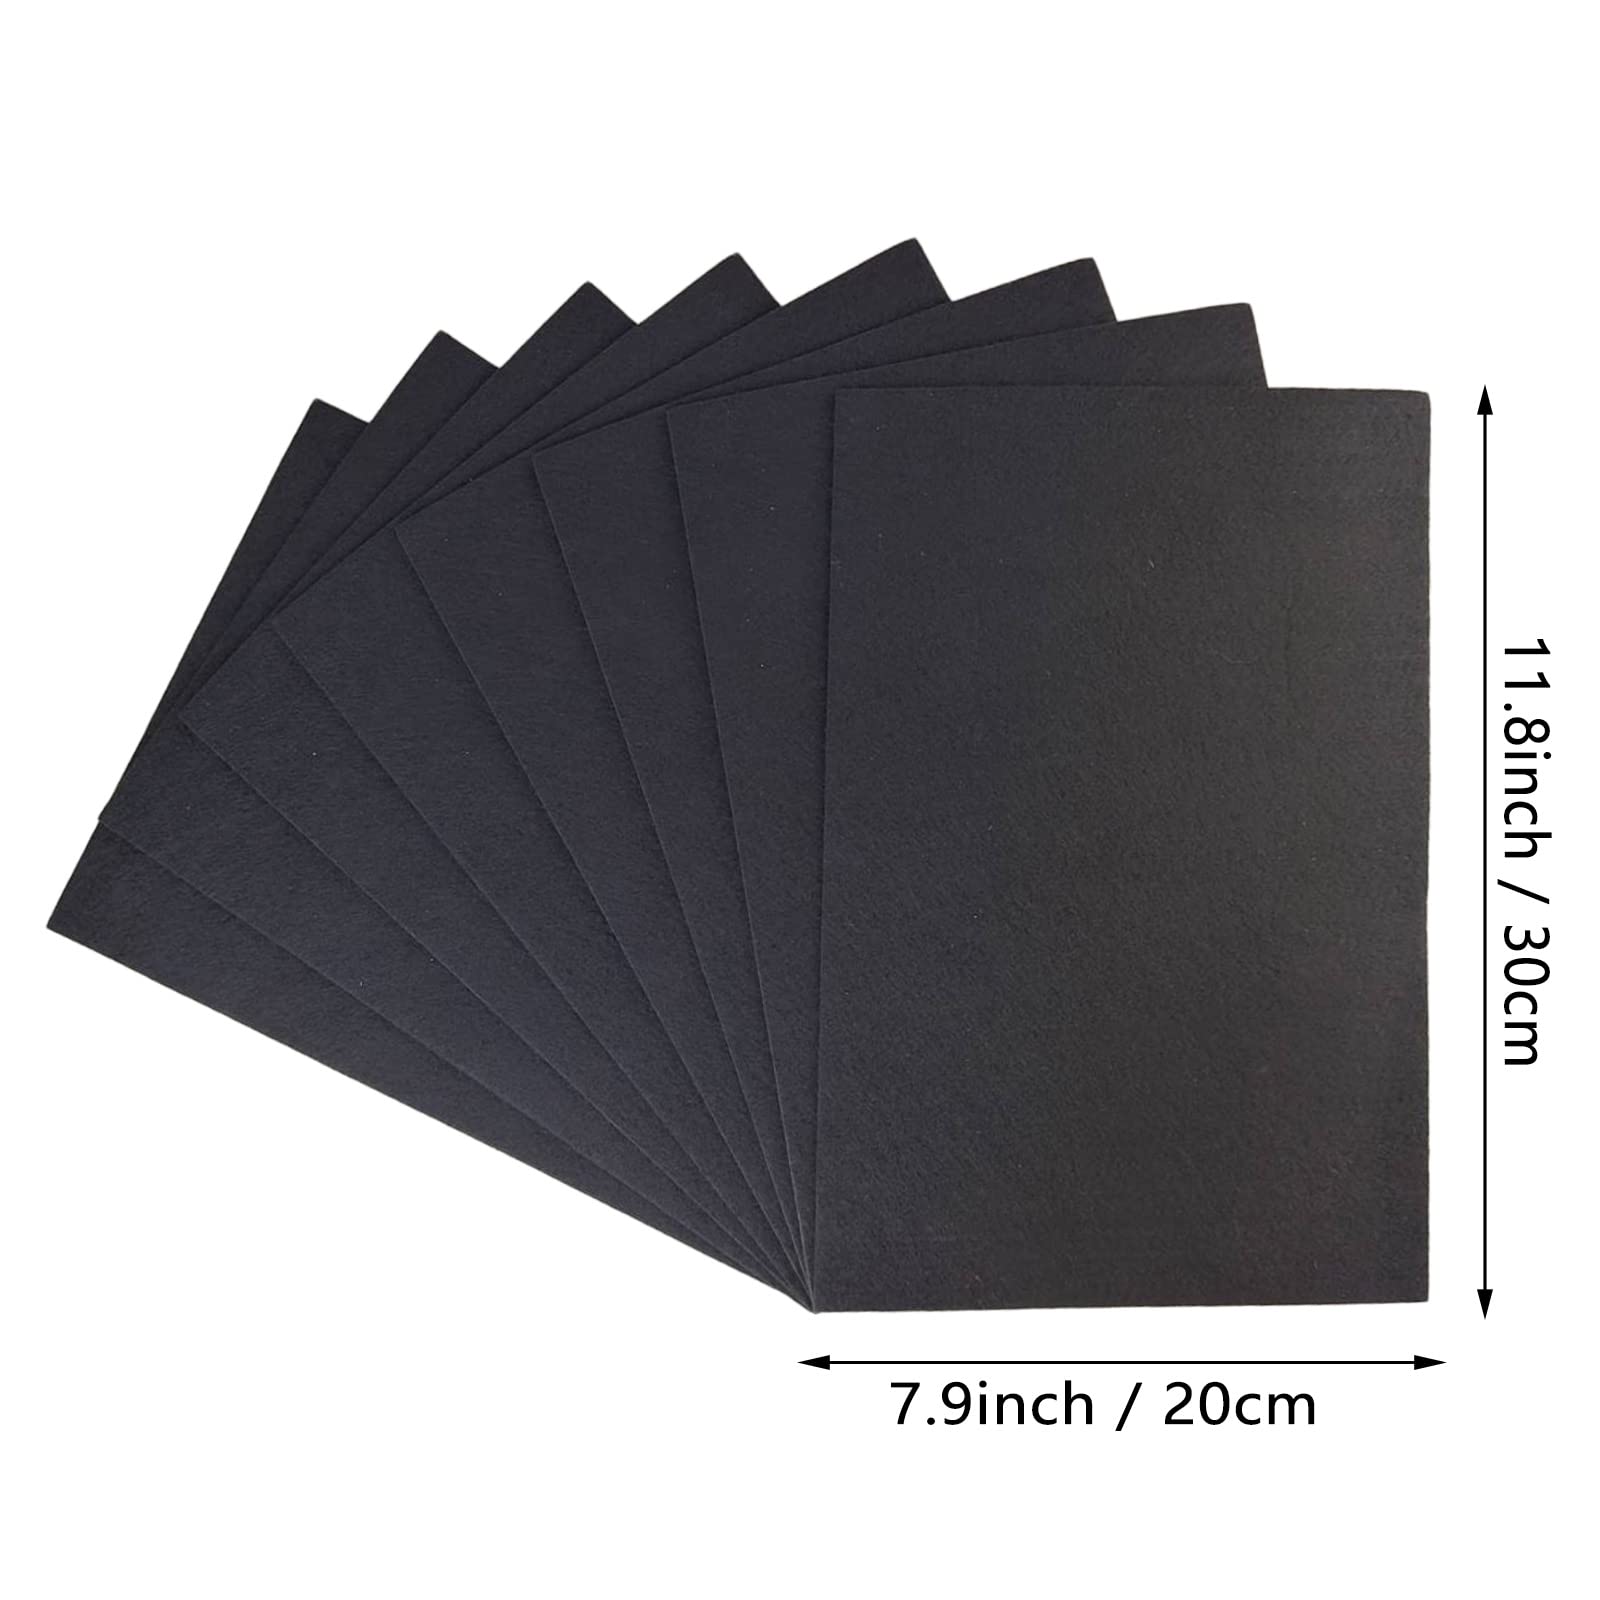 Jtnohx Stiff Felt, 2mm Thick Felt Sheets for Crafts, 8x12 Hard Felt  Fabric Squares for DIY Projects (Black)